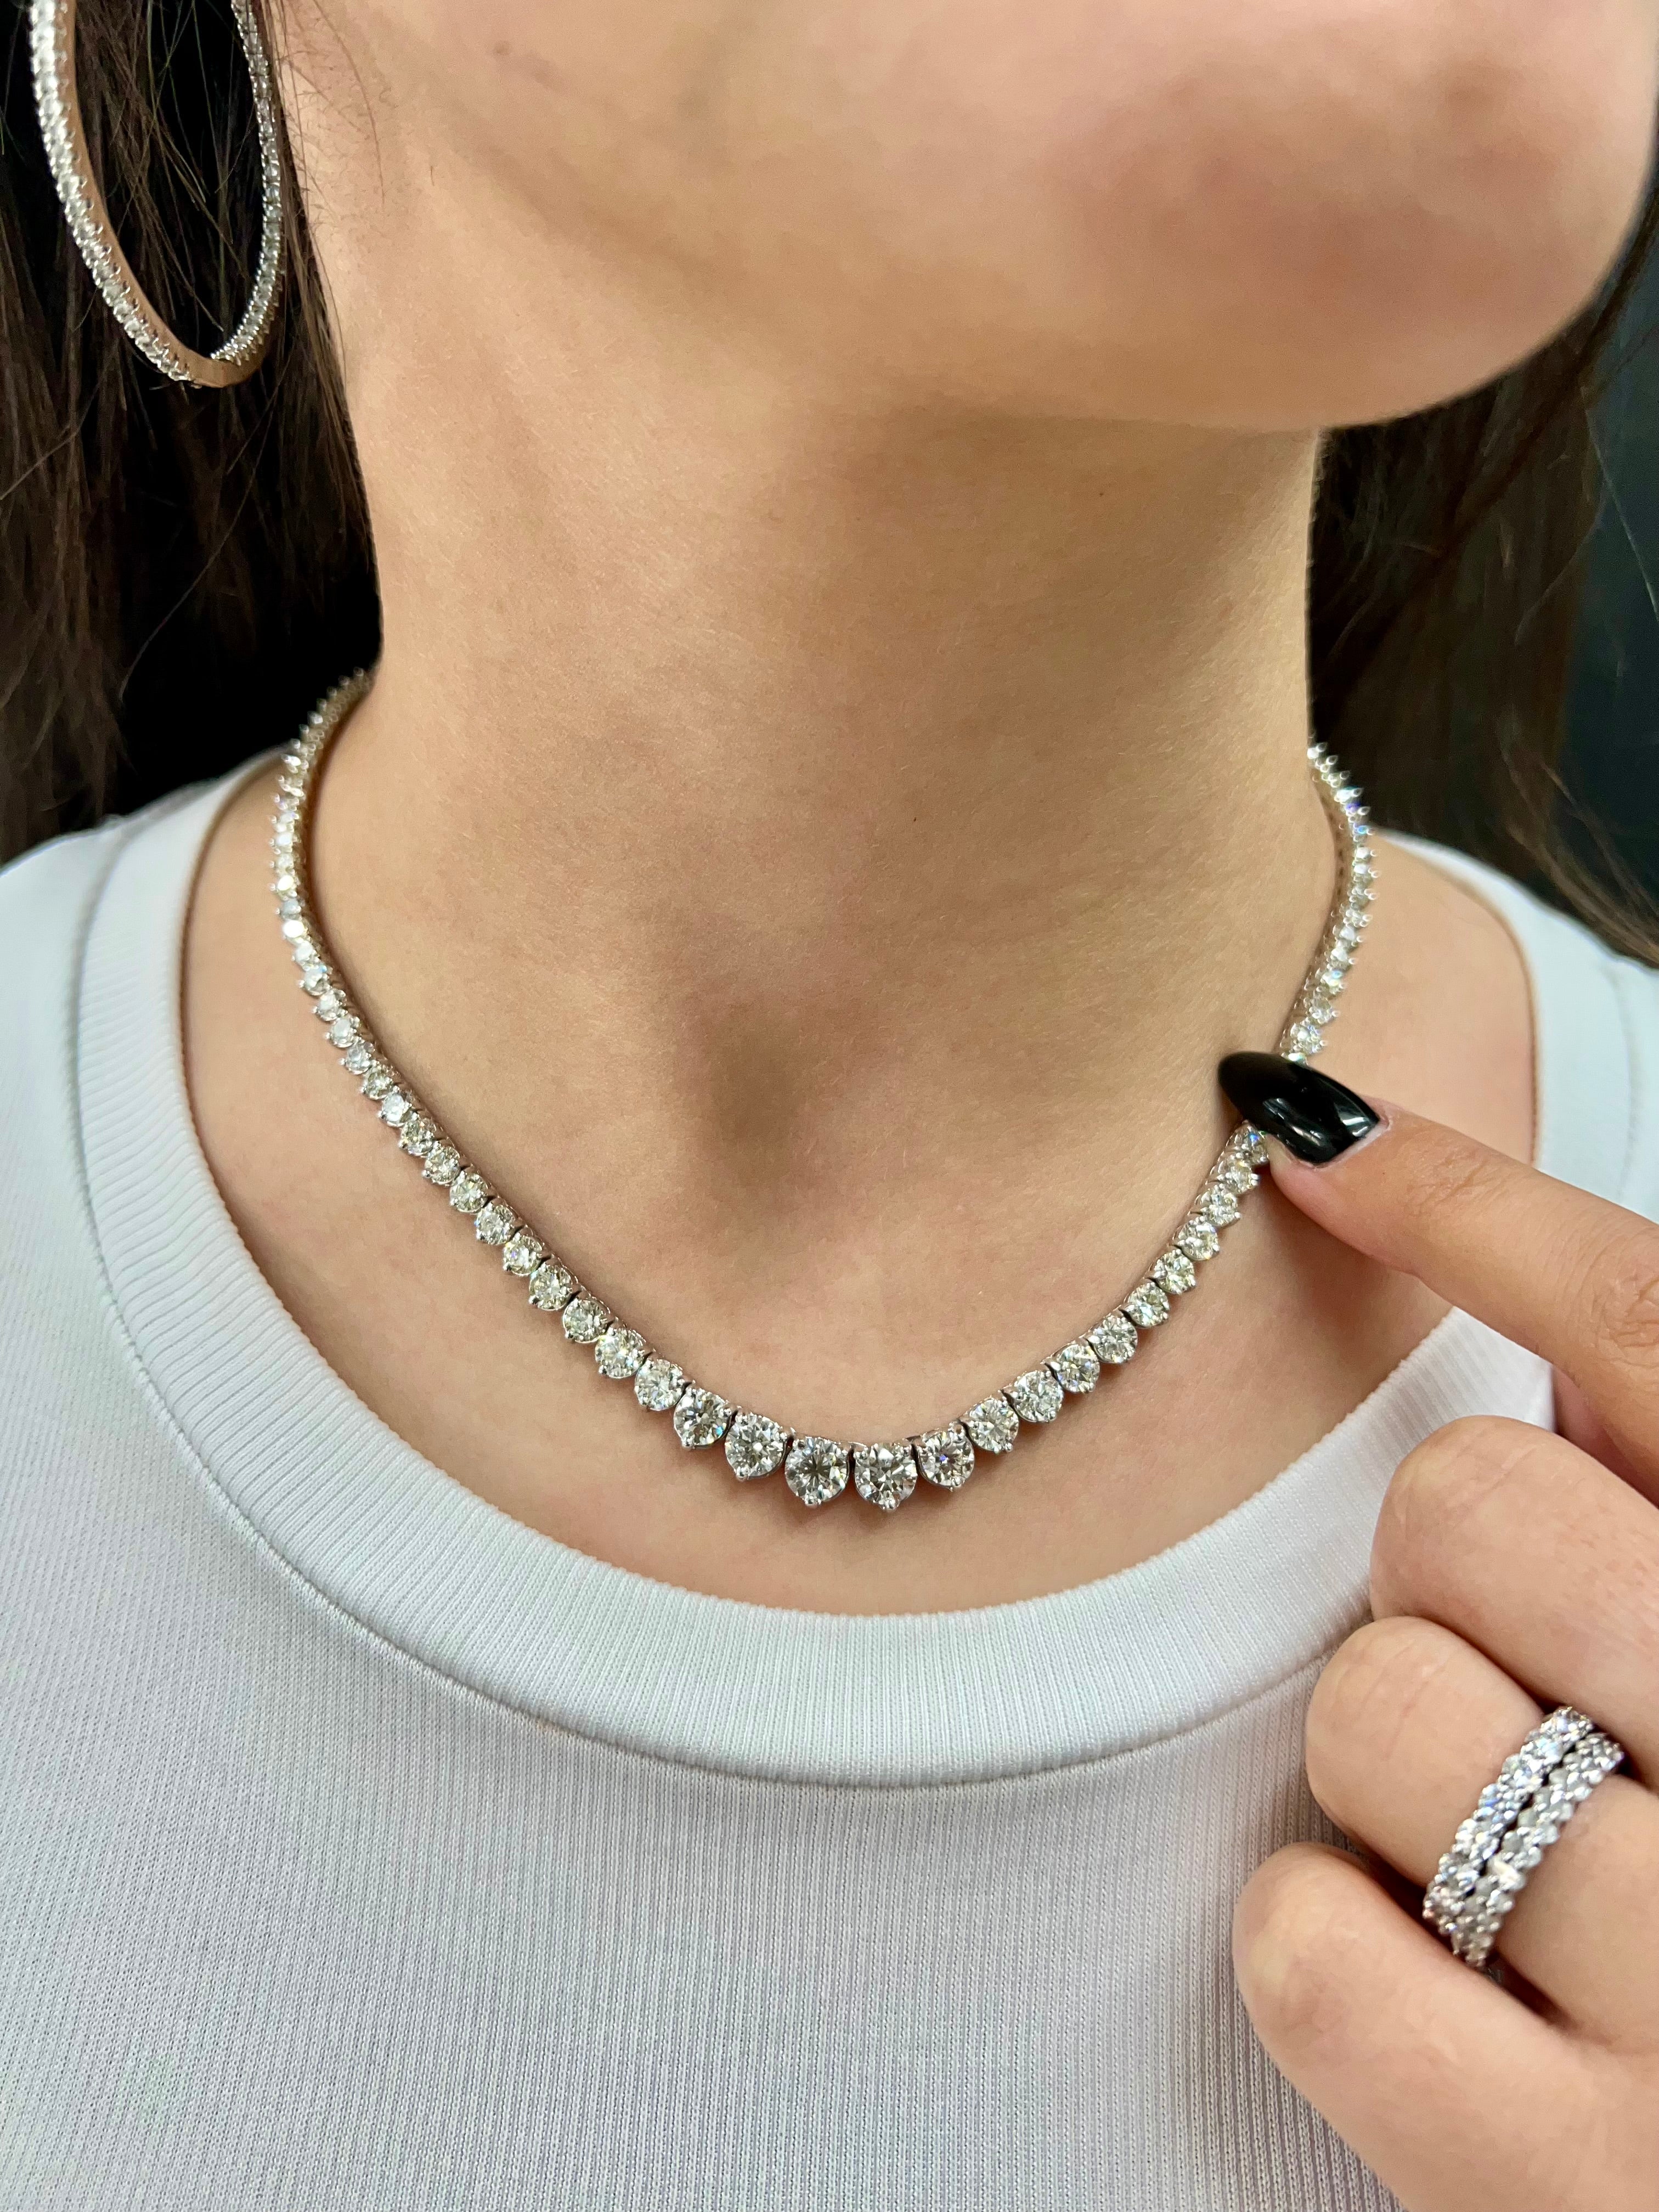 3-Prong Diamond Tennis Necklace for Women | Jennifer Meyer